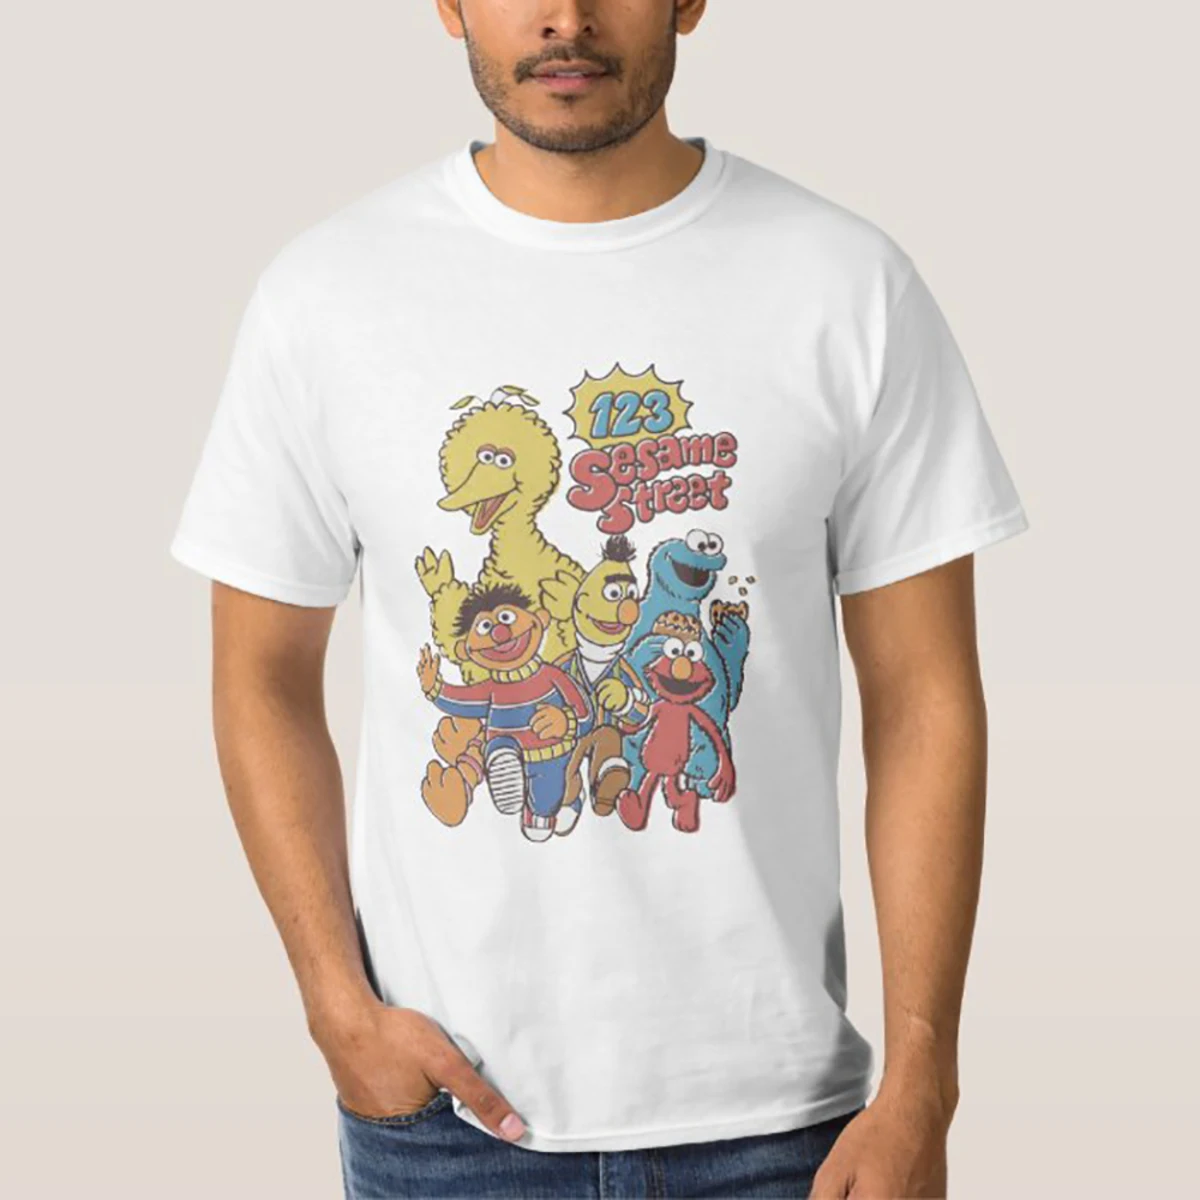 

Vintage 123 Sesame Street 2 Men's T Shirts Fun Tee Shirt Short Sleeve Round Neck T-Shirt Cotton Party Clothes